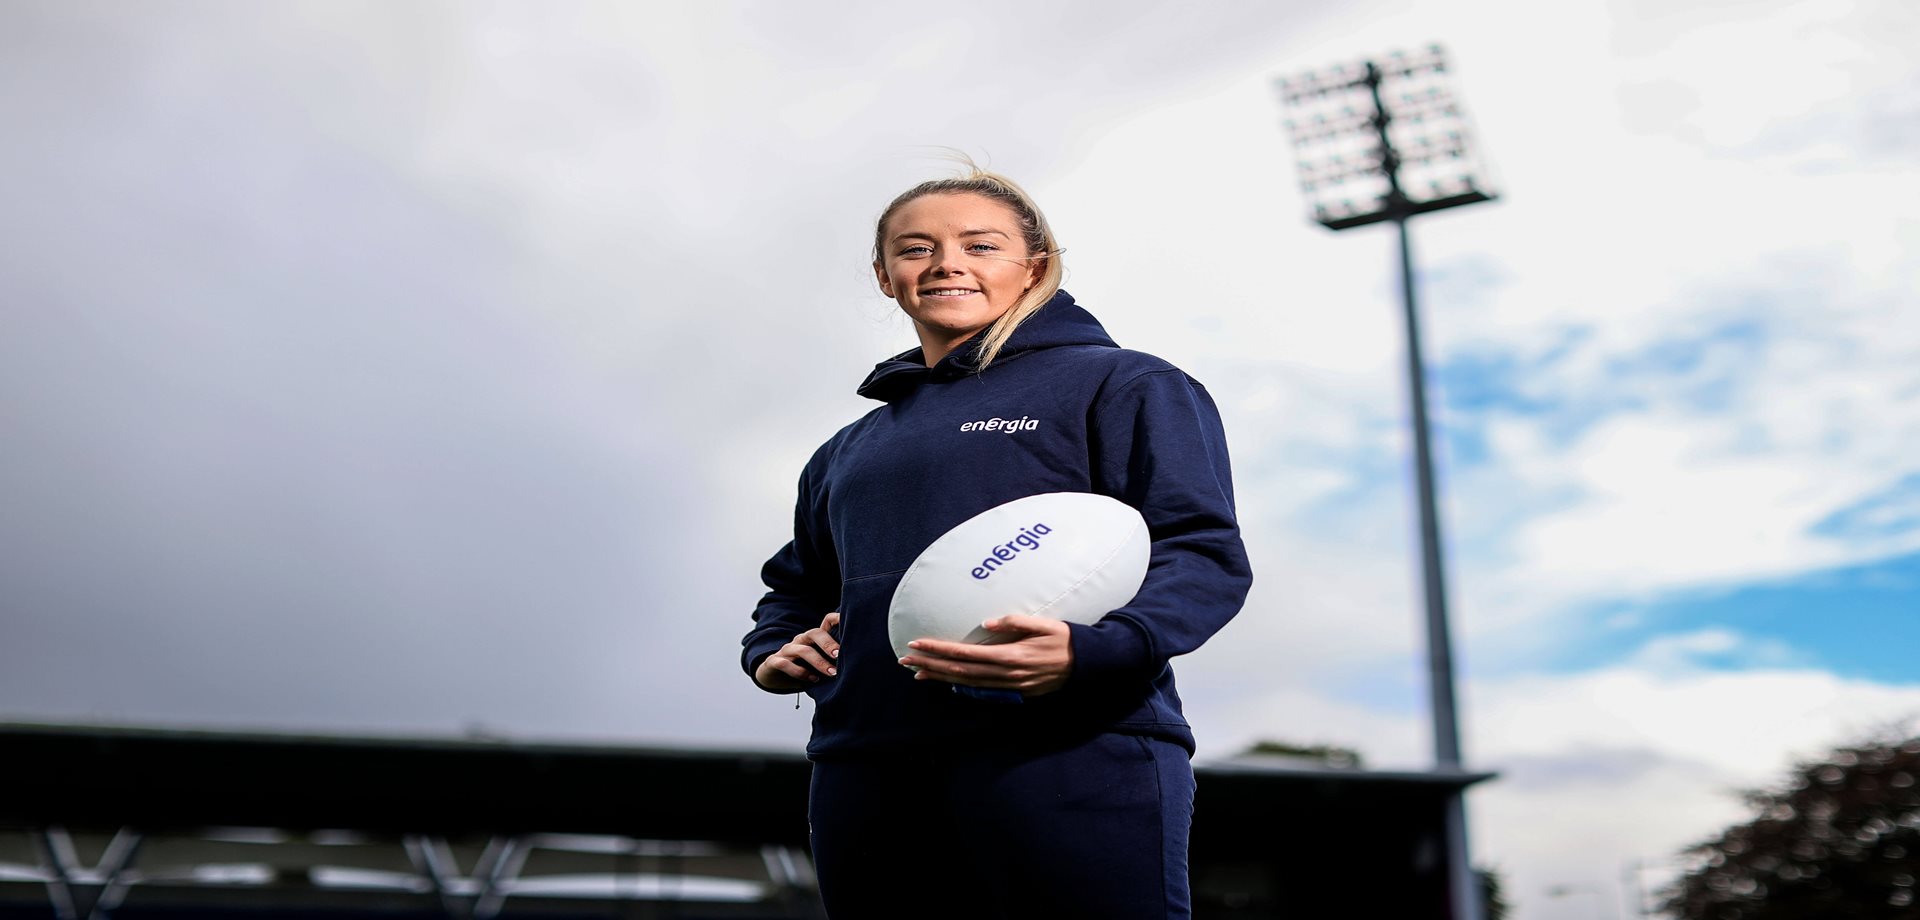 Exciting interpro series can kick start latest new era for Irish women’s rugby